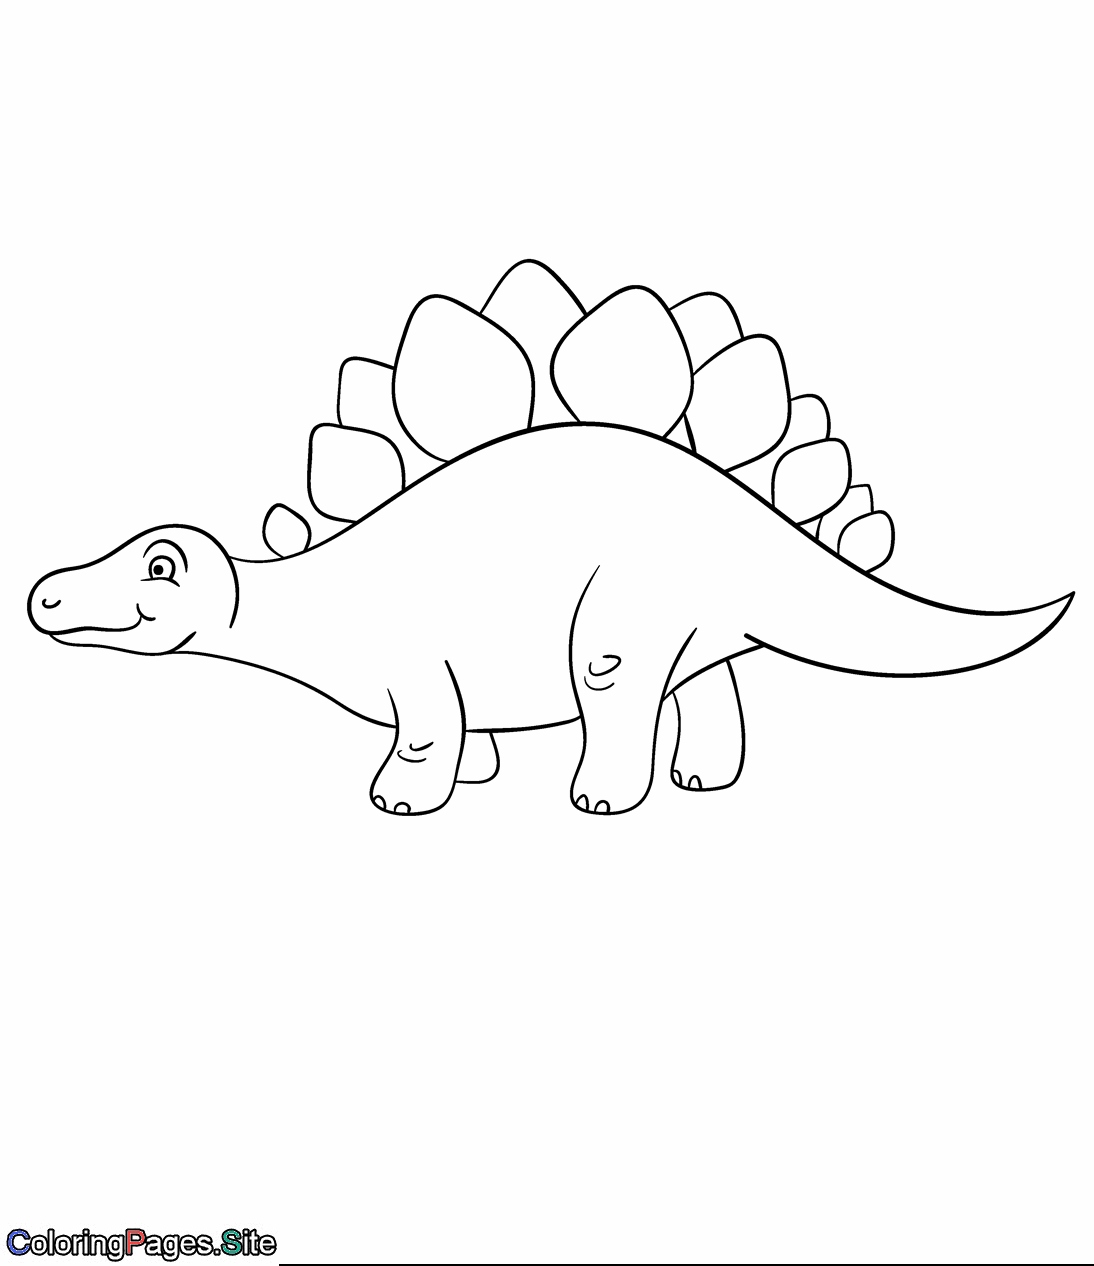 Stegosaurus Coloring Page at GetColorings.com | Free printable ...